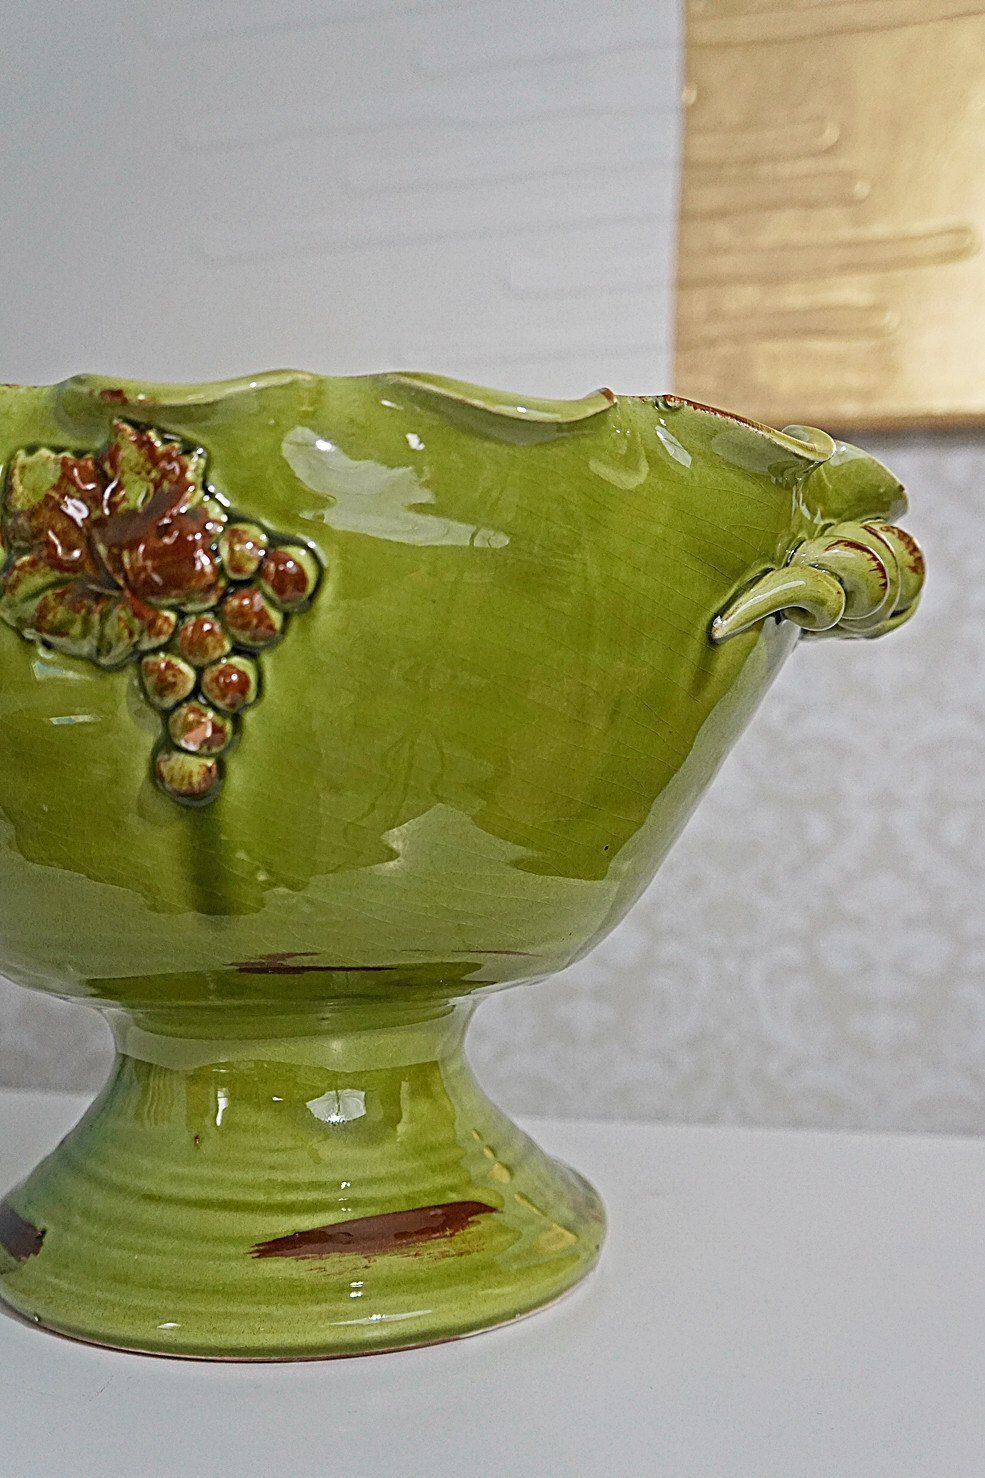 Ceramic Pedestal "Arte Italica" Fruit Bowl-closiTherapi | vinTage